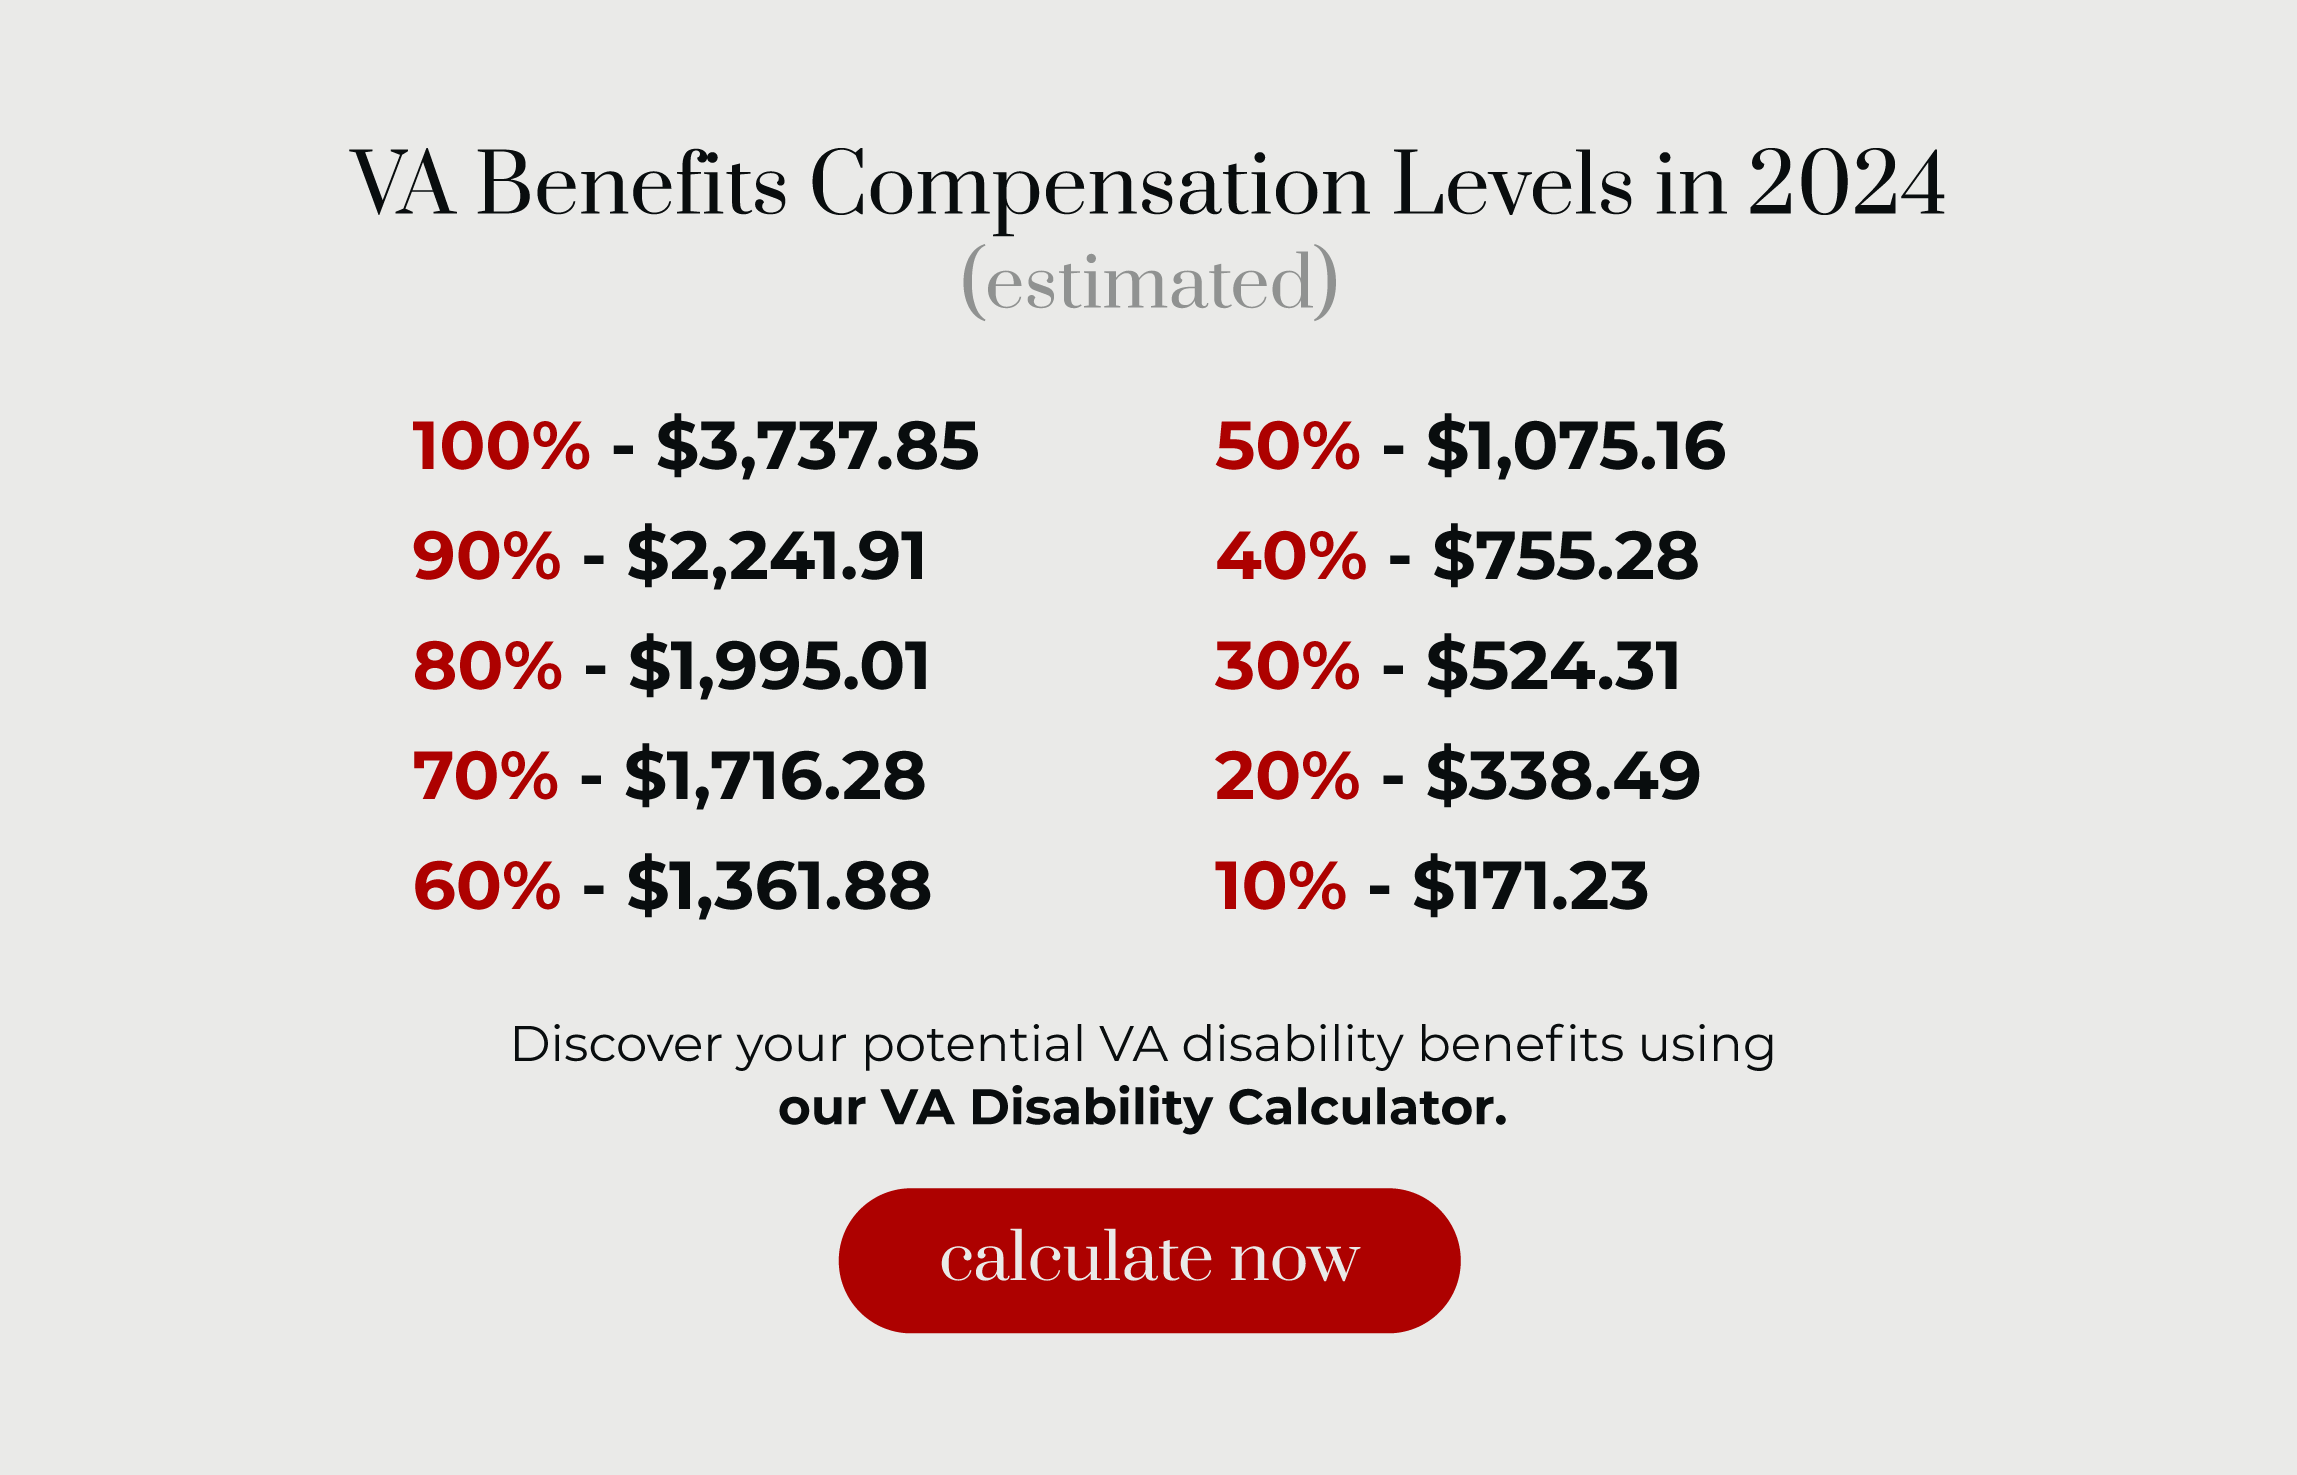 va benefits compensation levels in 2024